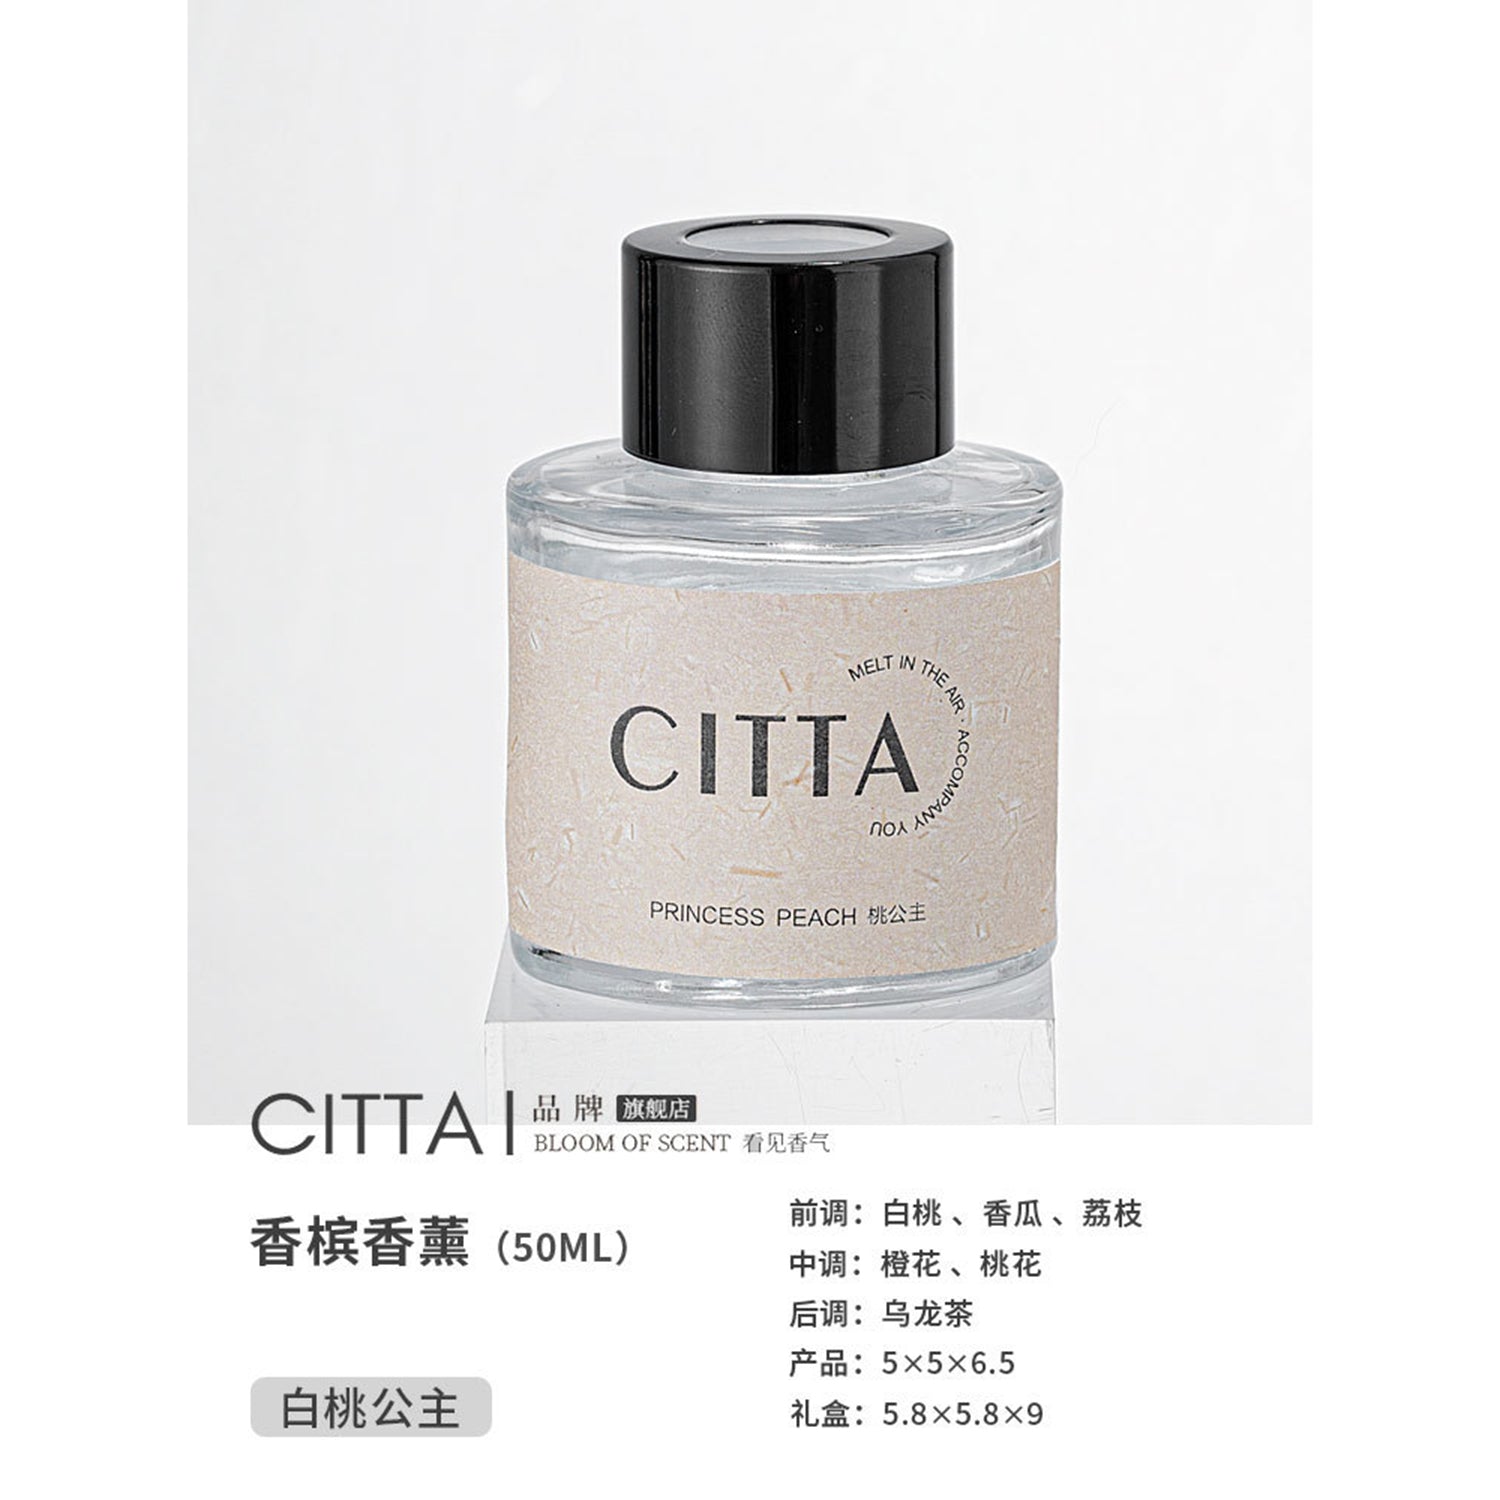 CITTA Car Aroma Fragrance 50ML Air Freshener Purifier Reed Diffuser with Silicone Anti-Slip Pad Car Fragrance CITTA Princess Peach 